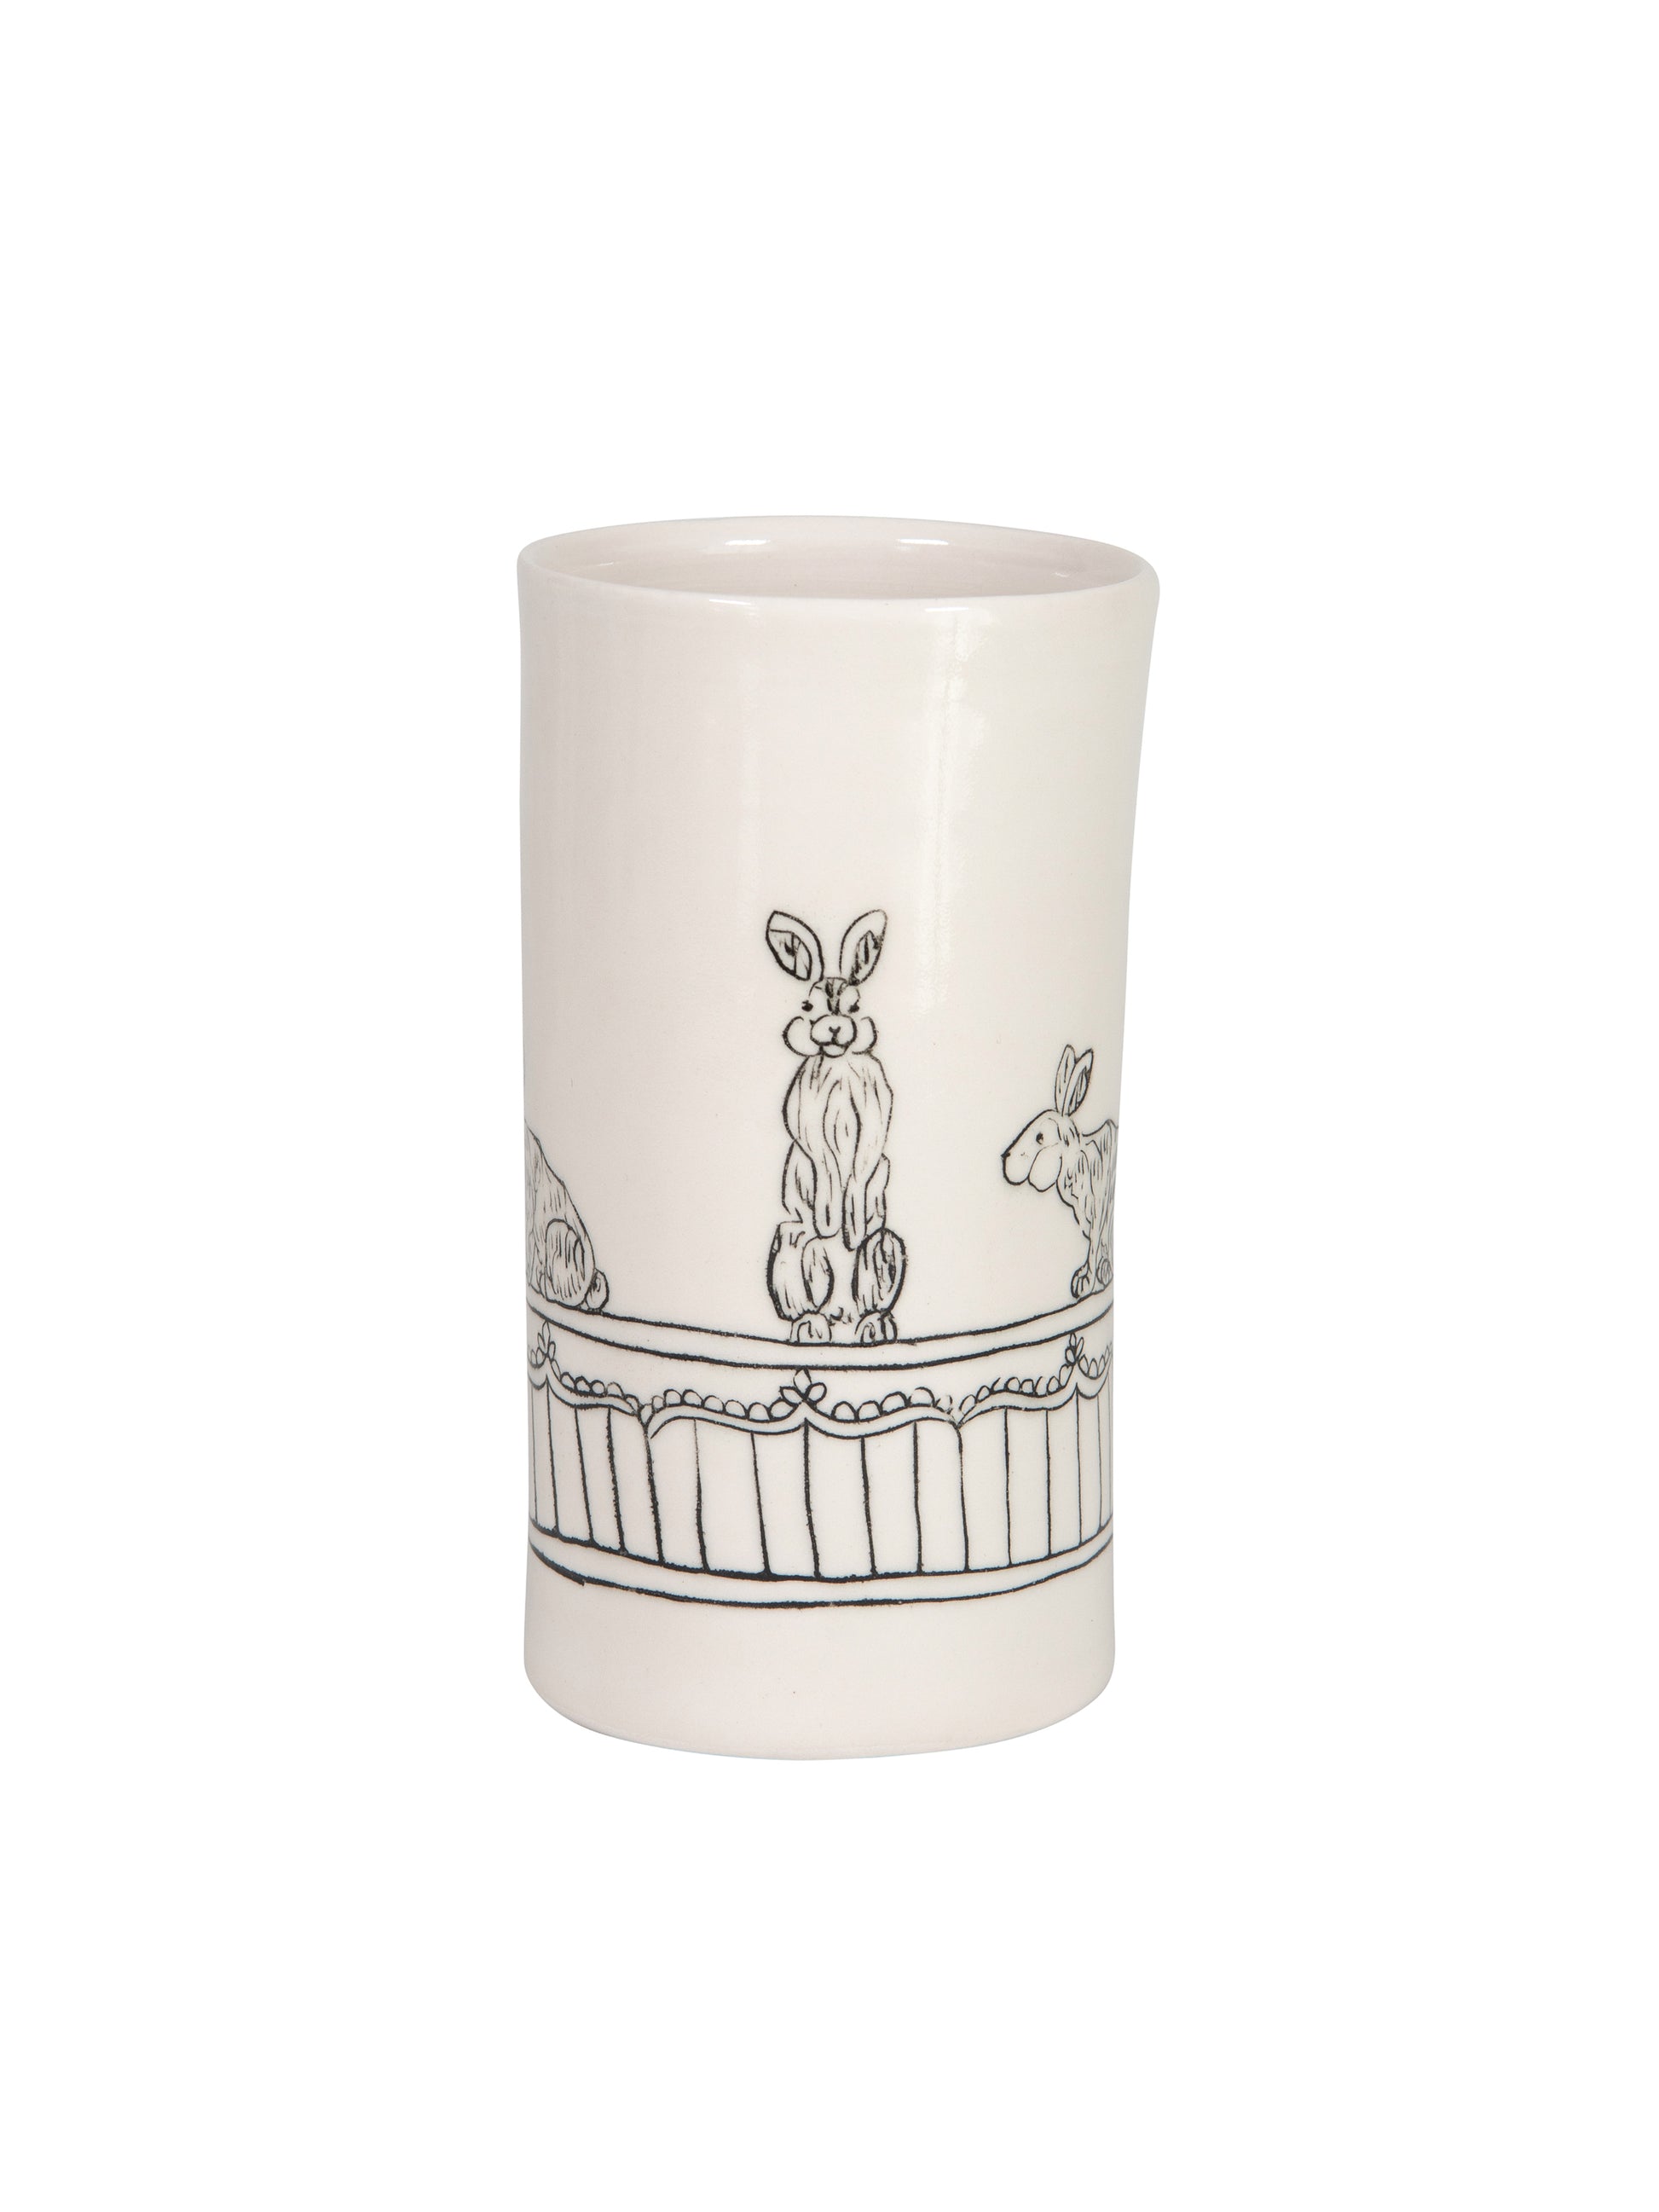 WT Hope and Mary Woodland Animal Tall Vase Rabbit Weston table